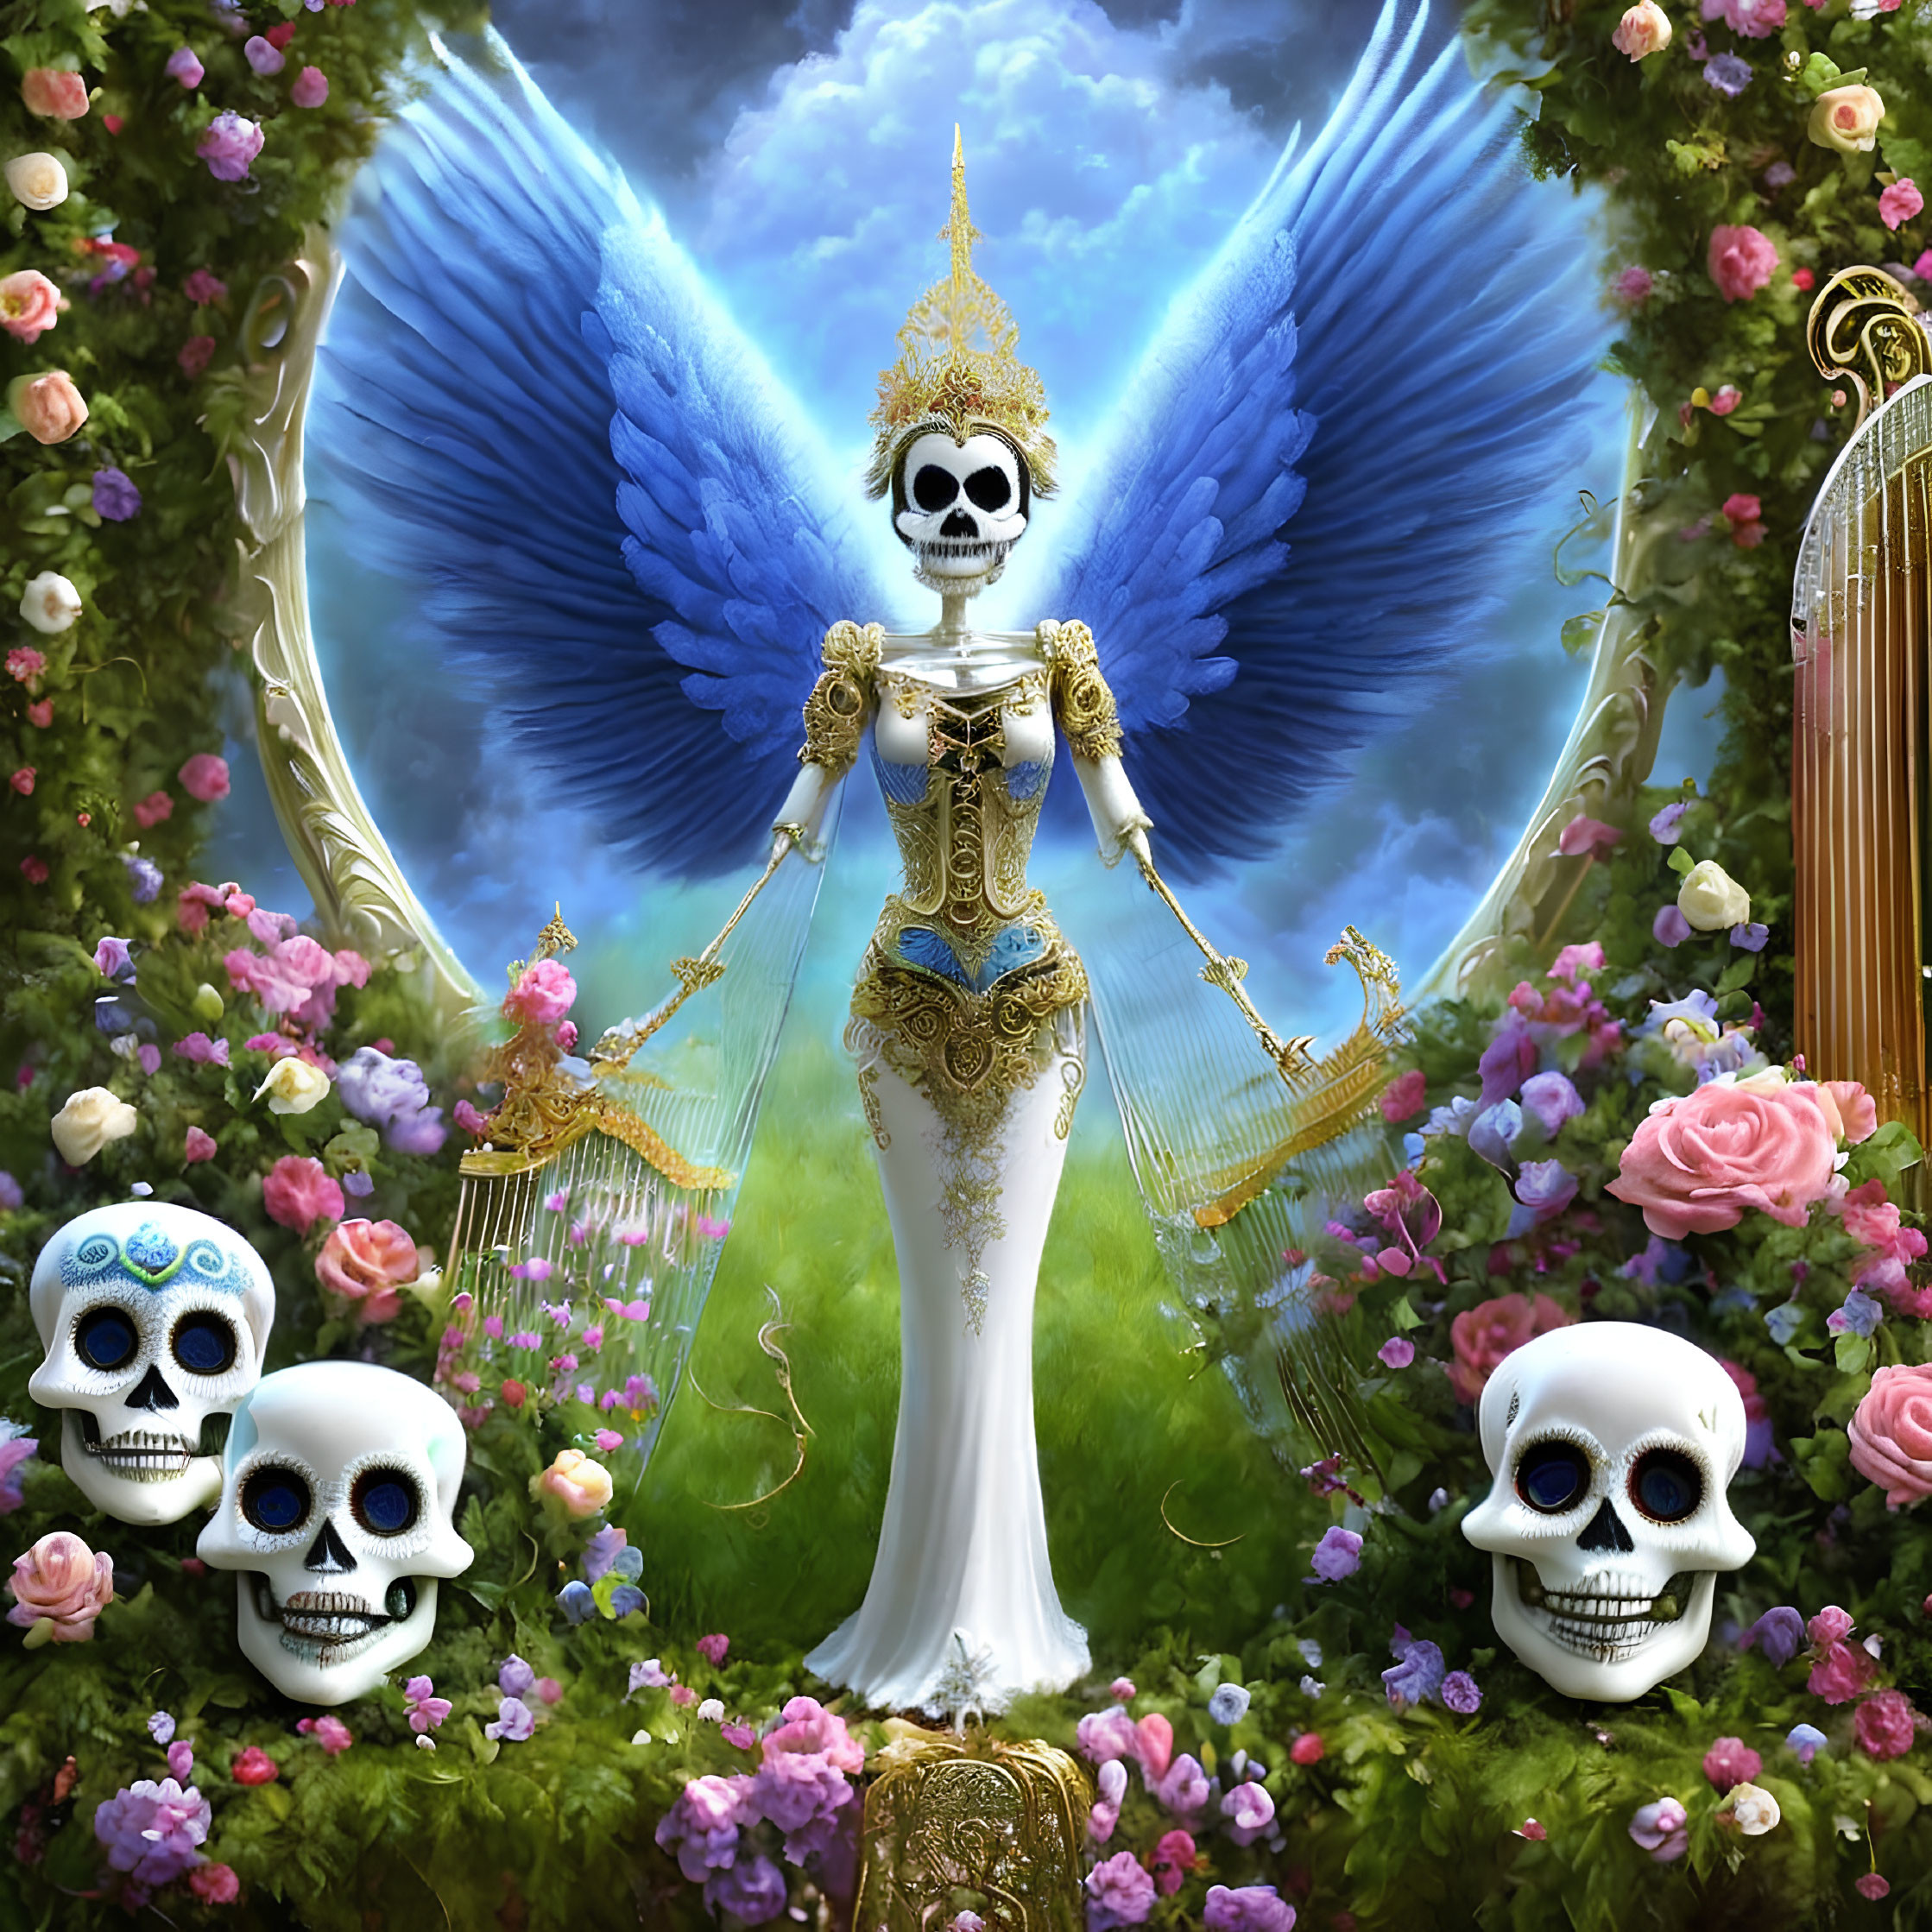 Thai regalia adorned skeletal figure with blue wings, roses, skulls, surreal cloudy backdrop